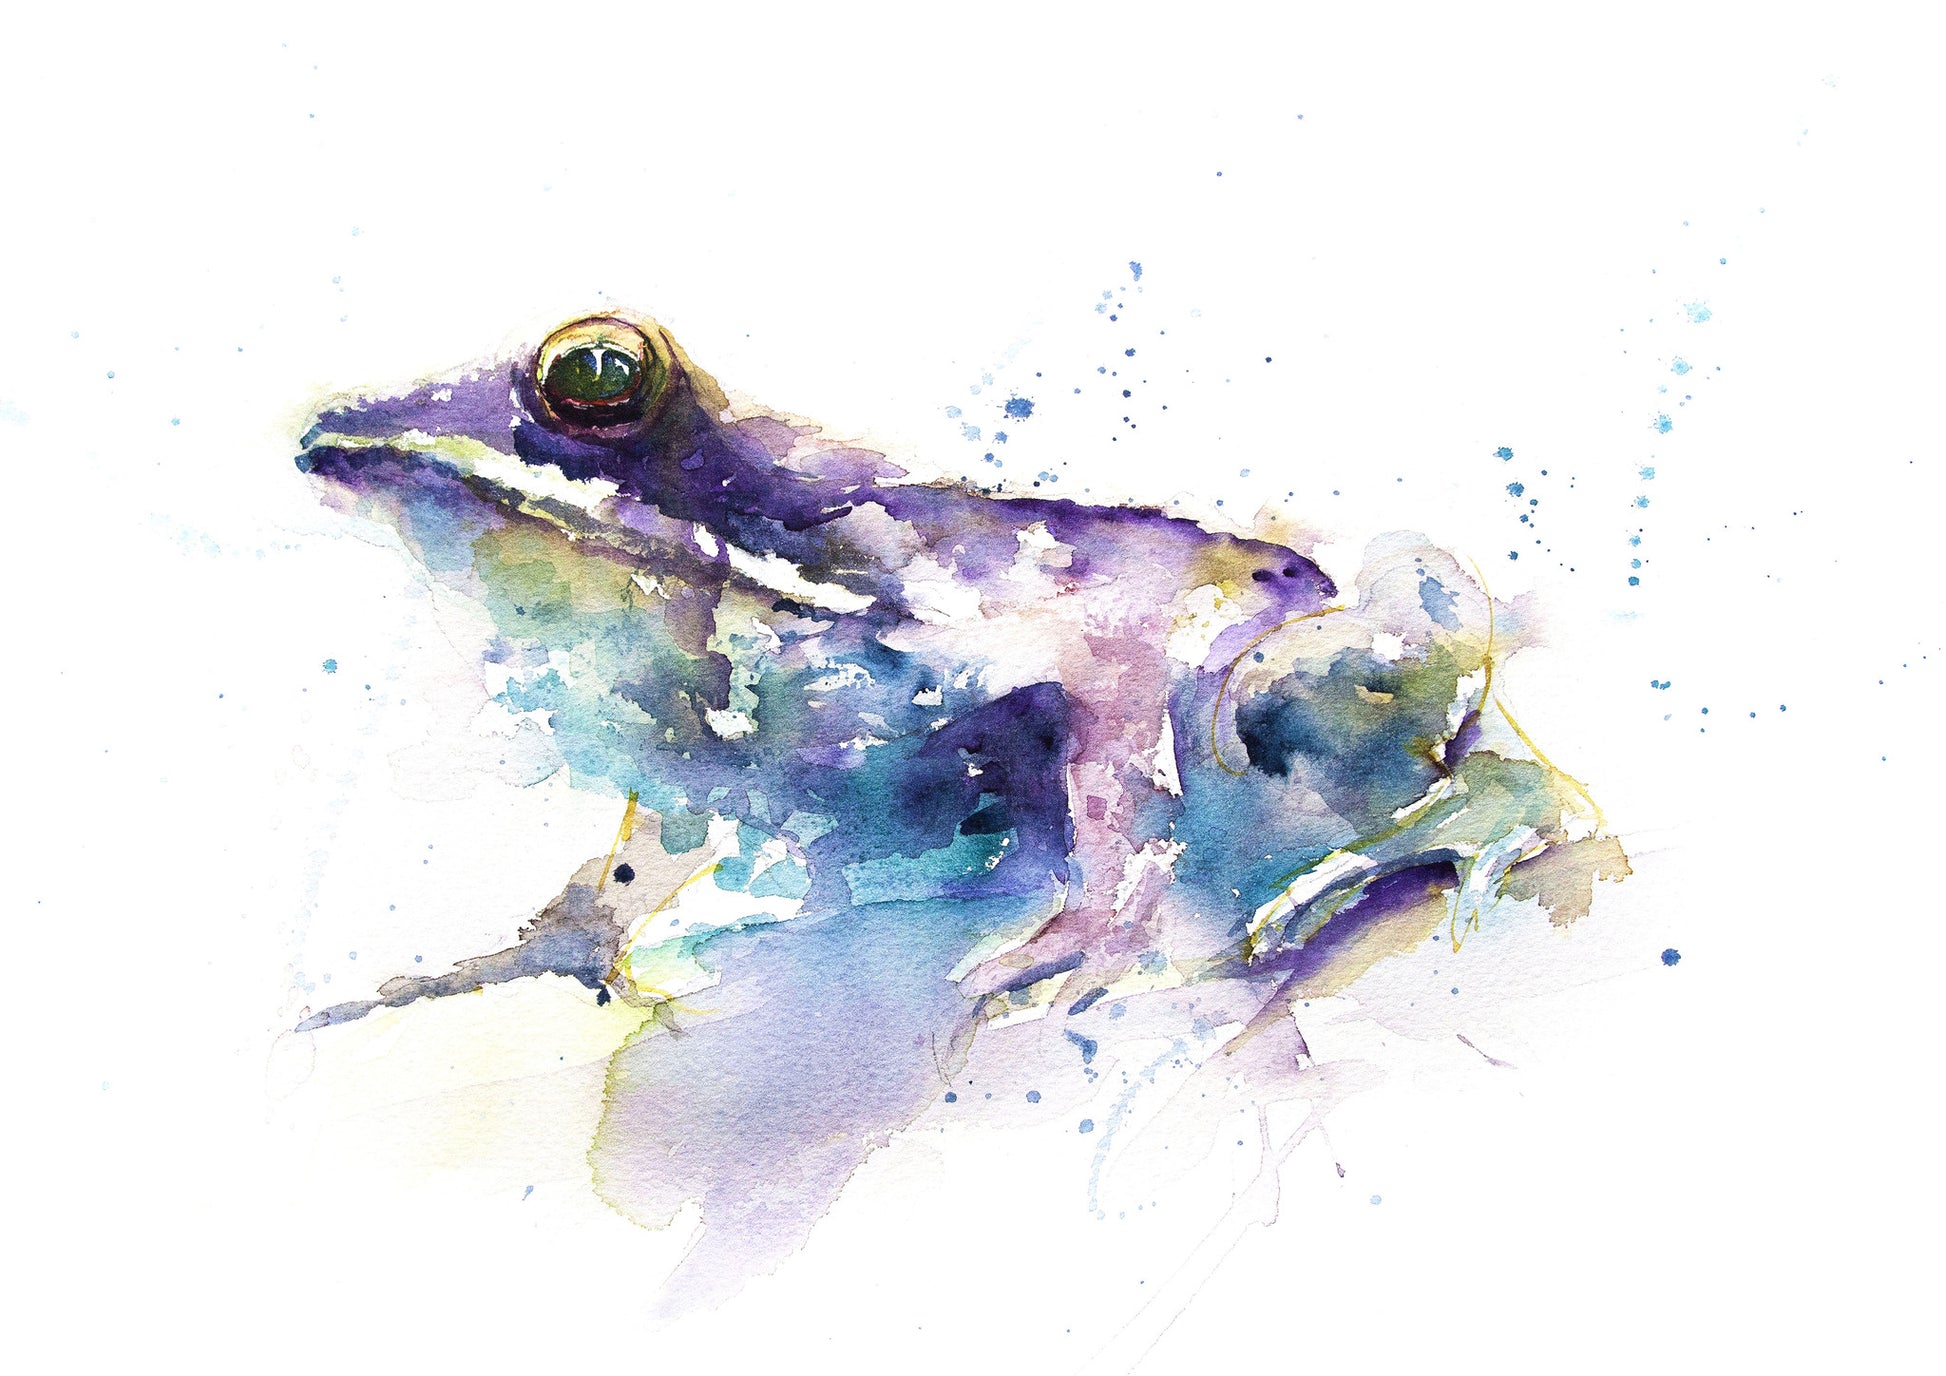 JEN BUCKLEY ART  signed PRINT of my original frog watercolour LARGE A3 - Jen Buckley Art limited edition animal art prints